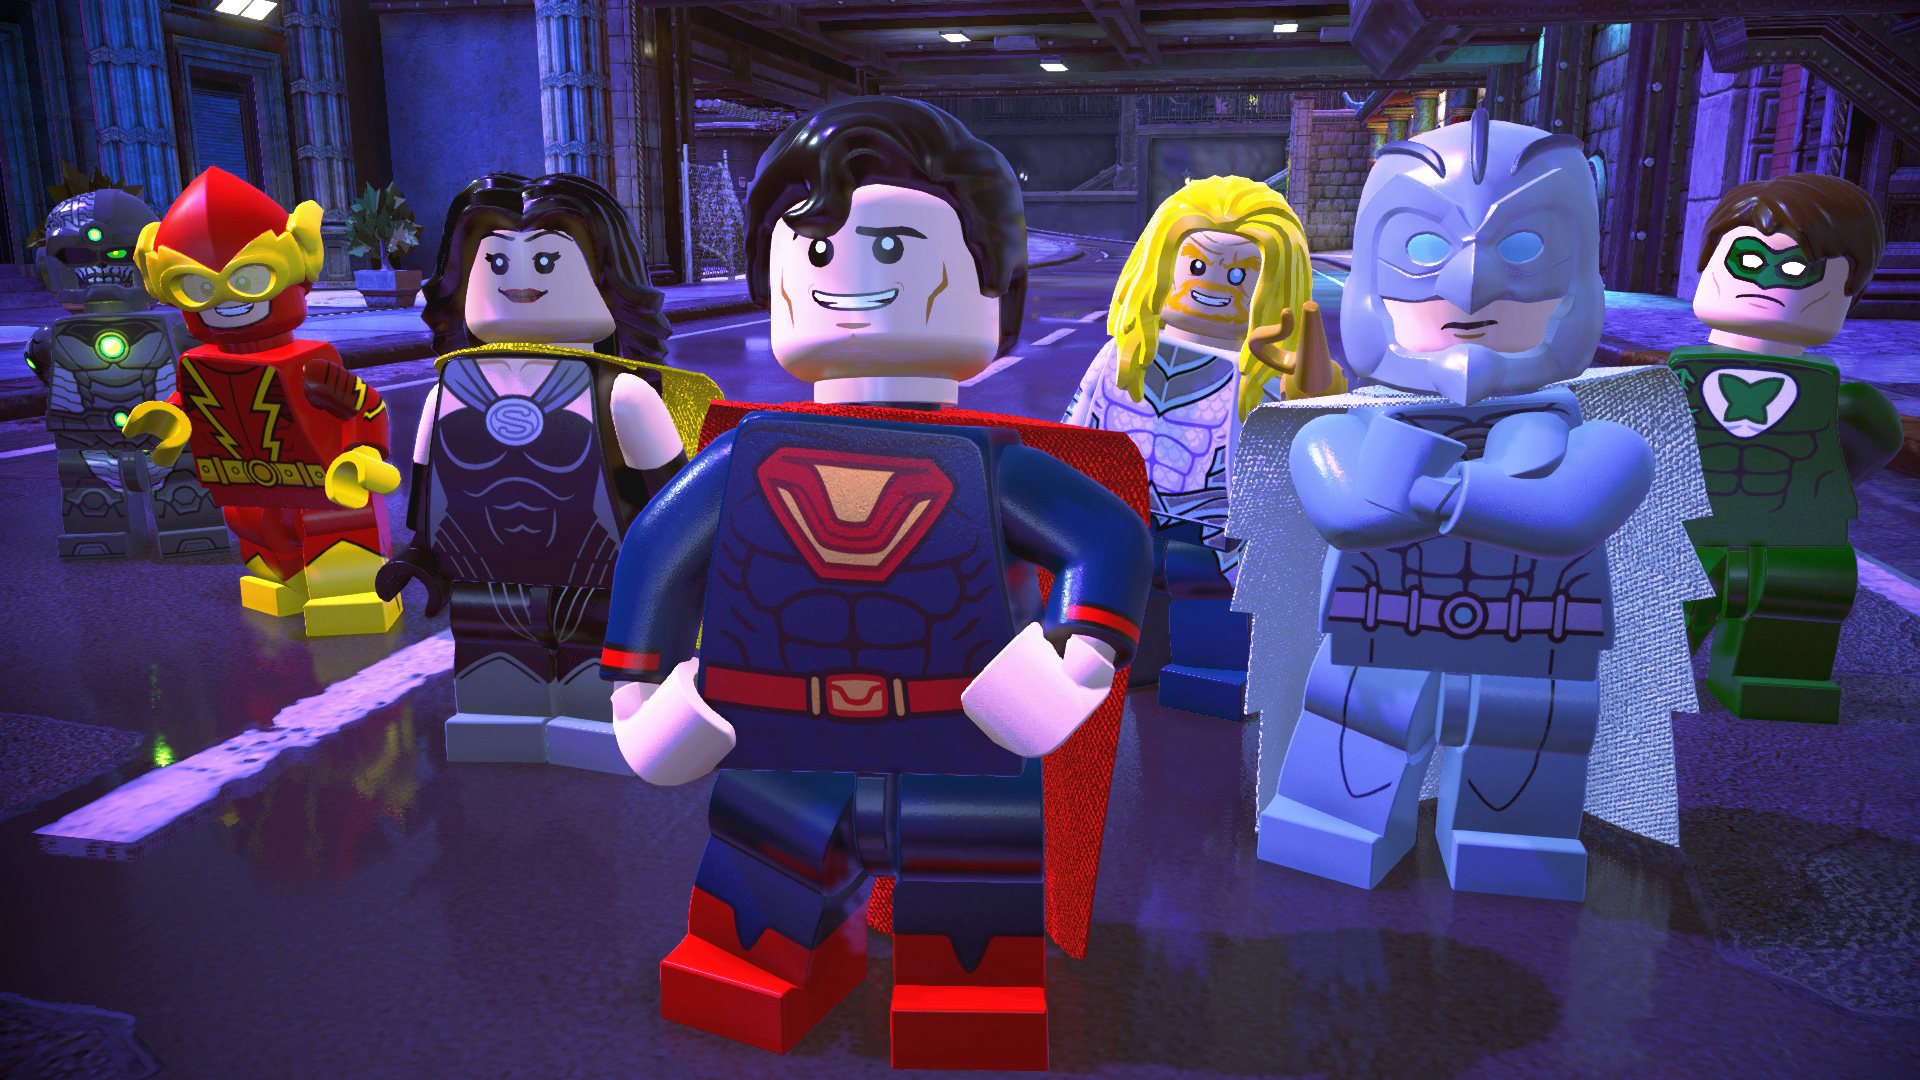 LEGO DC Super-Villains AR XBOX One CD Key